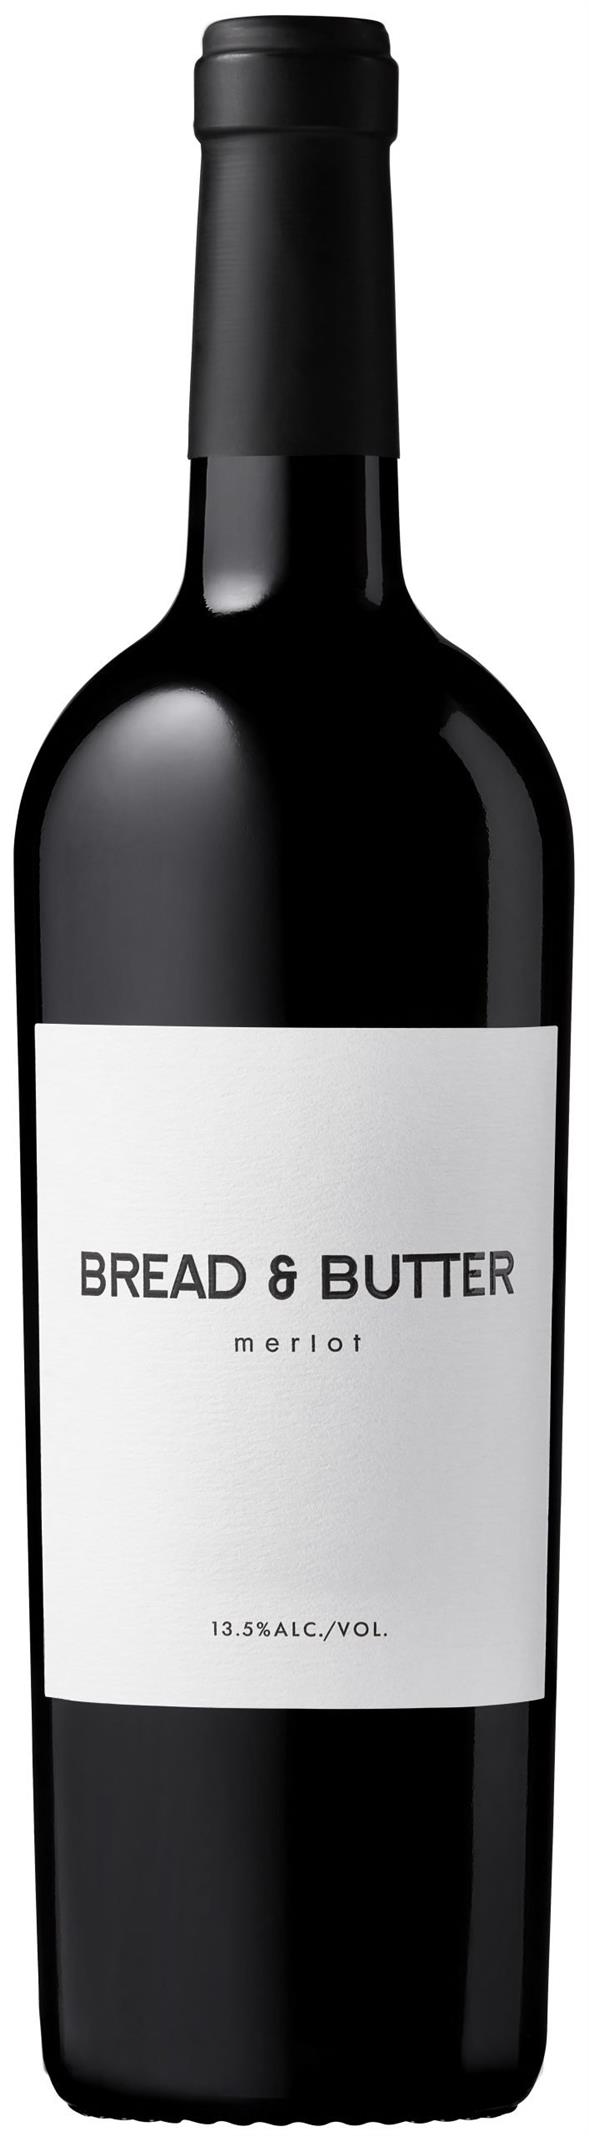 Bread & Butter – Merlot 2020